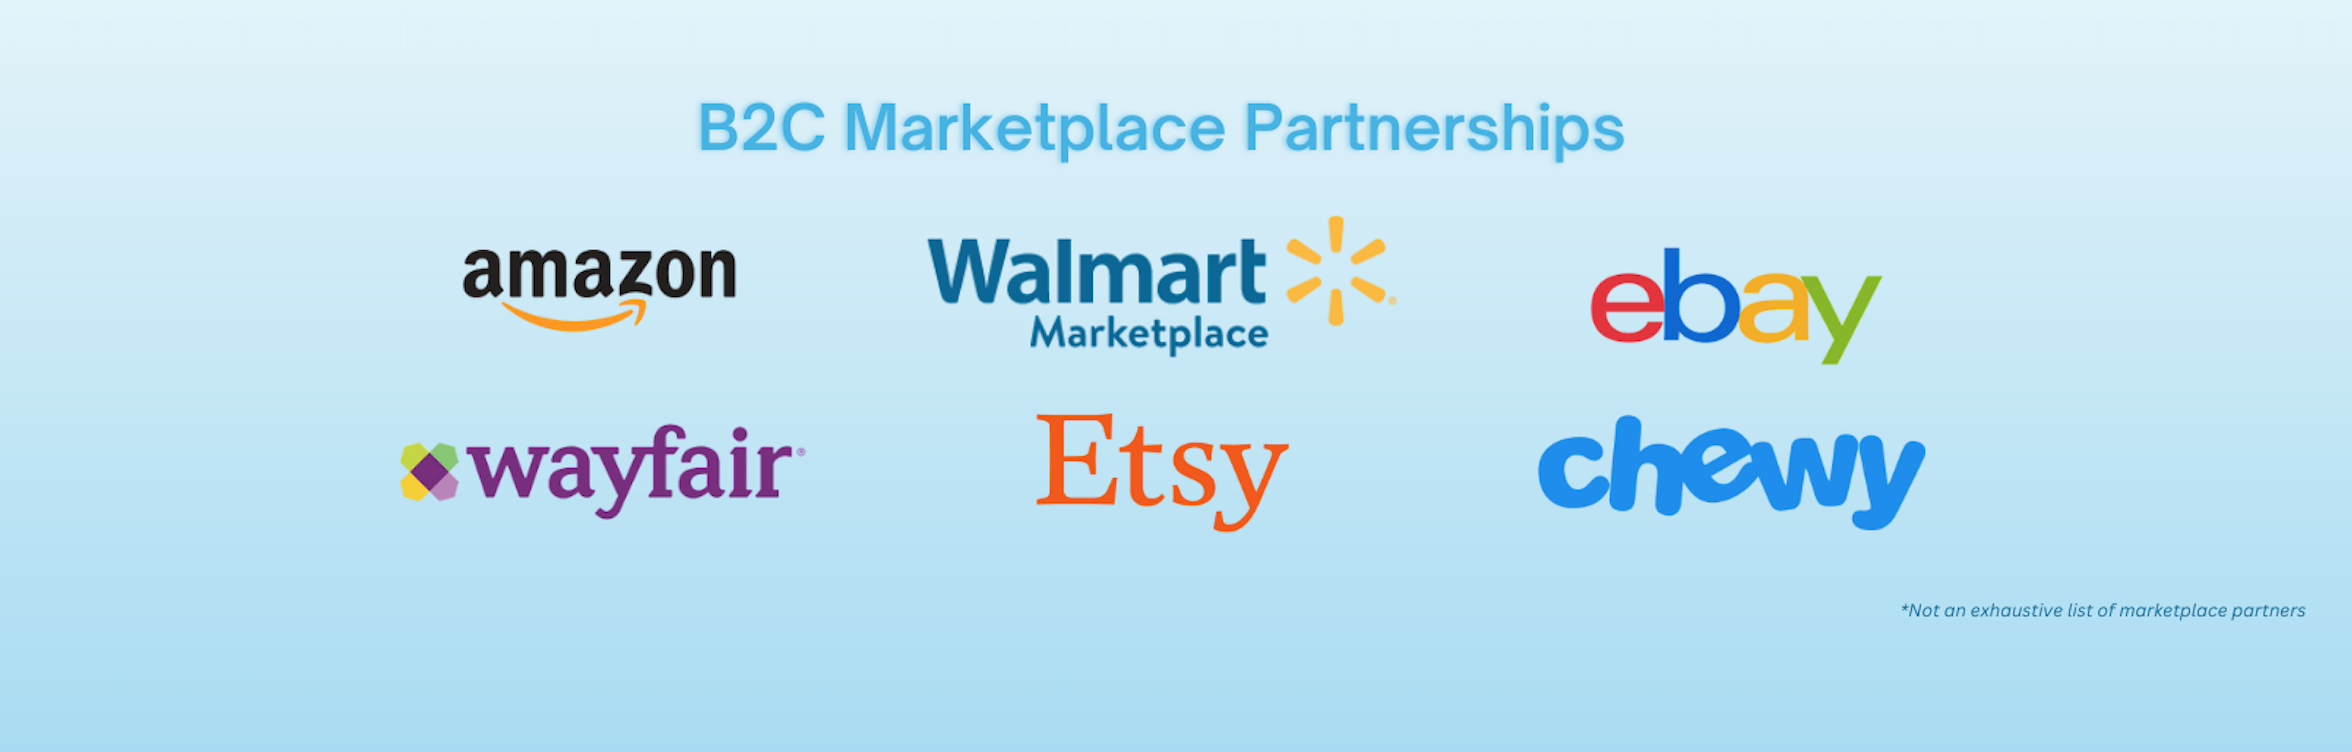 B2C Marketplace Partners